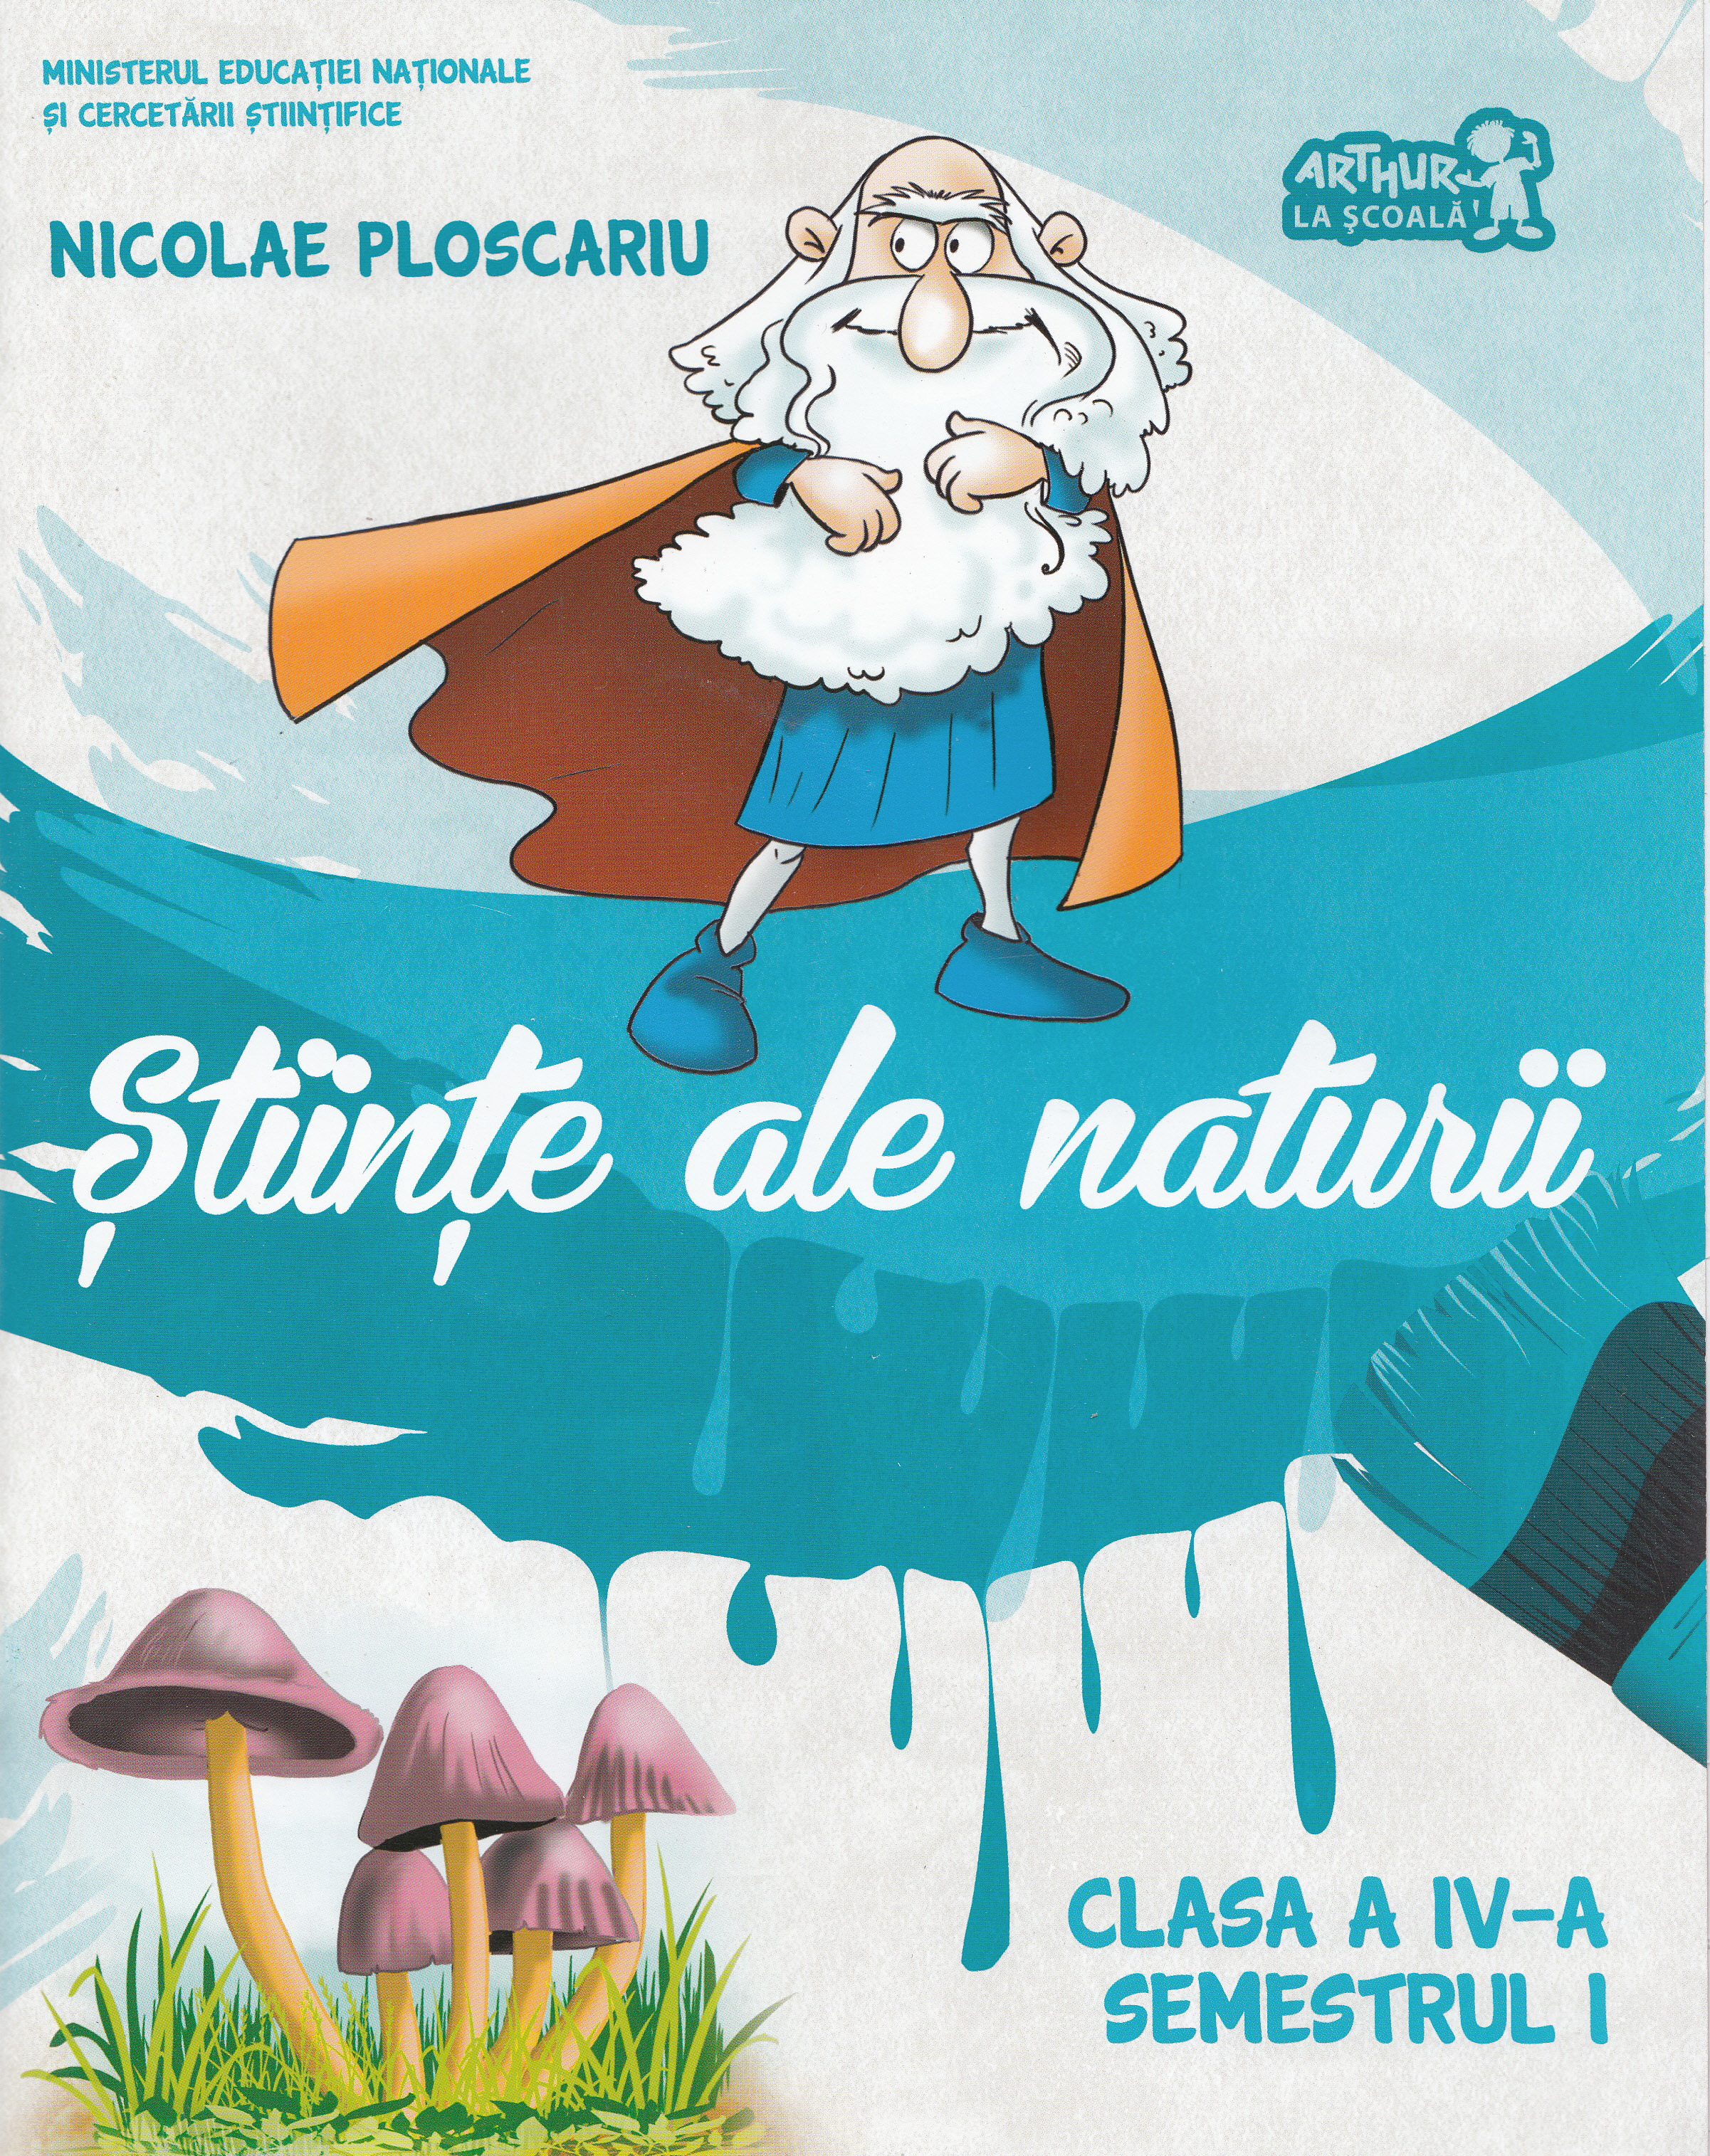 Stiinte ale naturii - Clasa 4. Sem.1 - Manual + CD - Nicolae Ploscariu